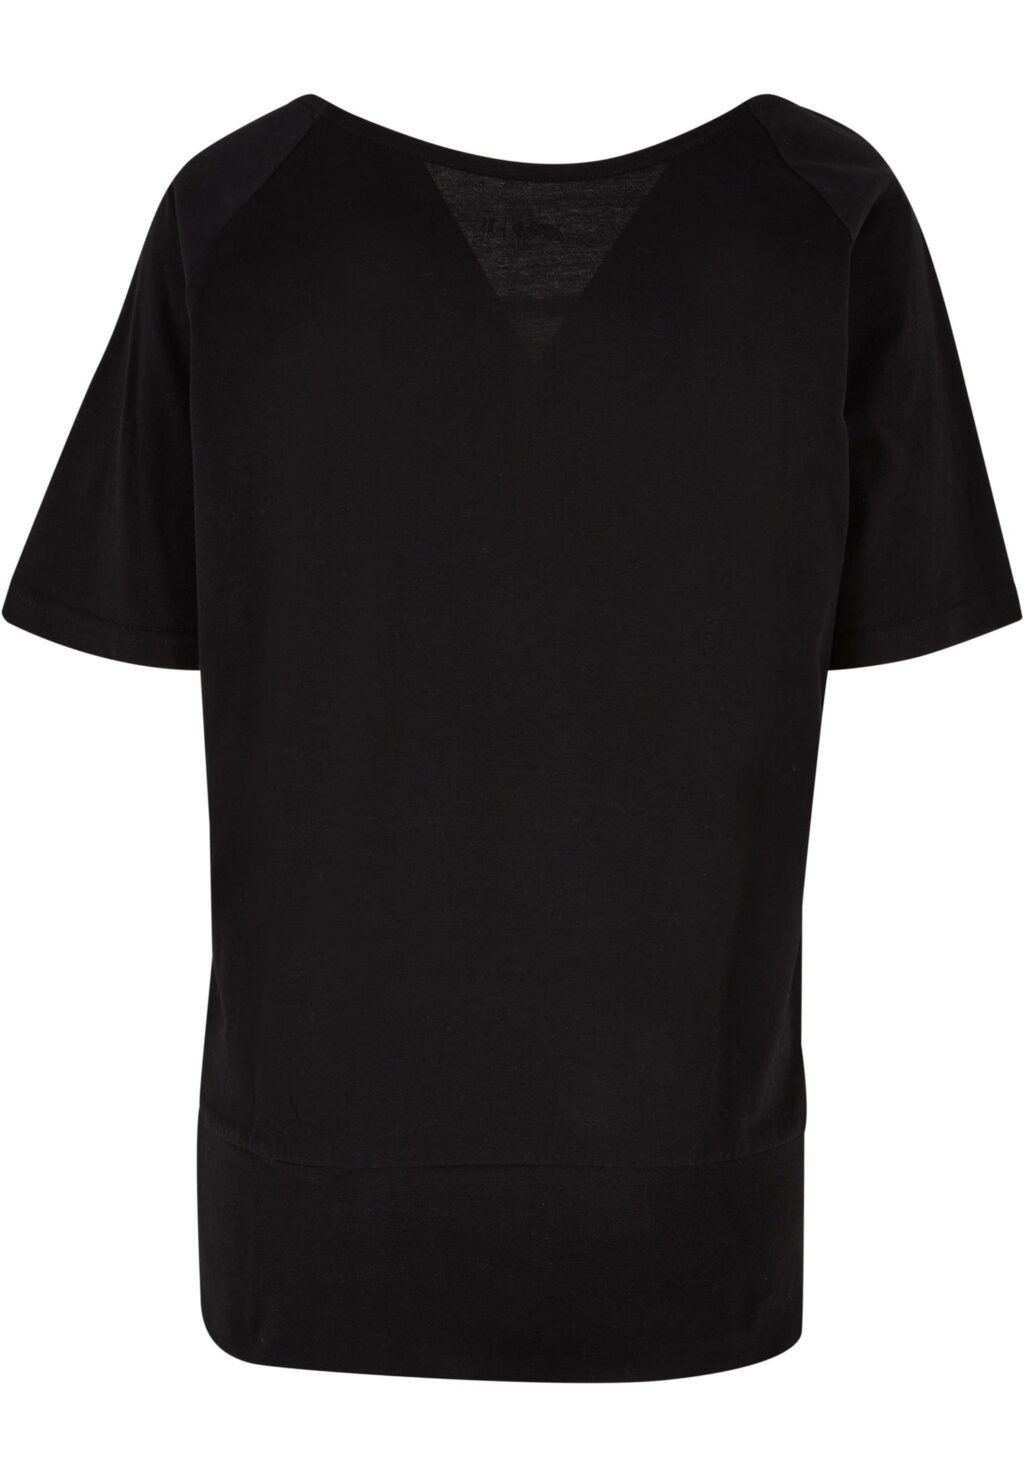 Just Rhyse Hopetn T-Shirt black JLTS243